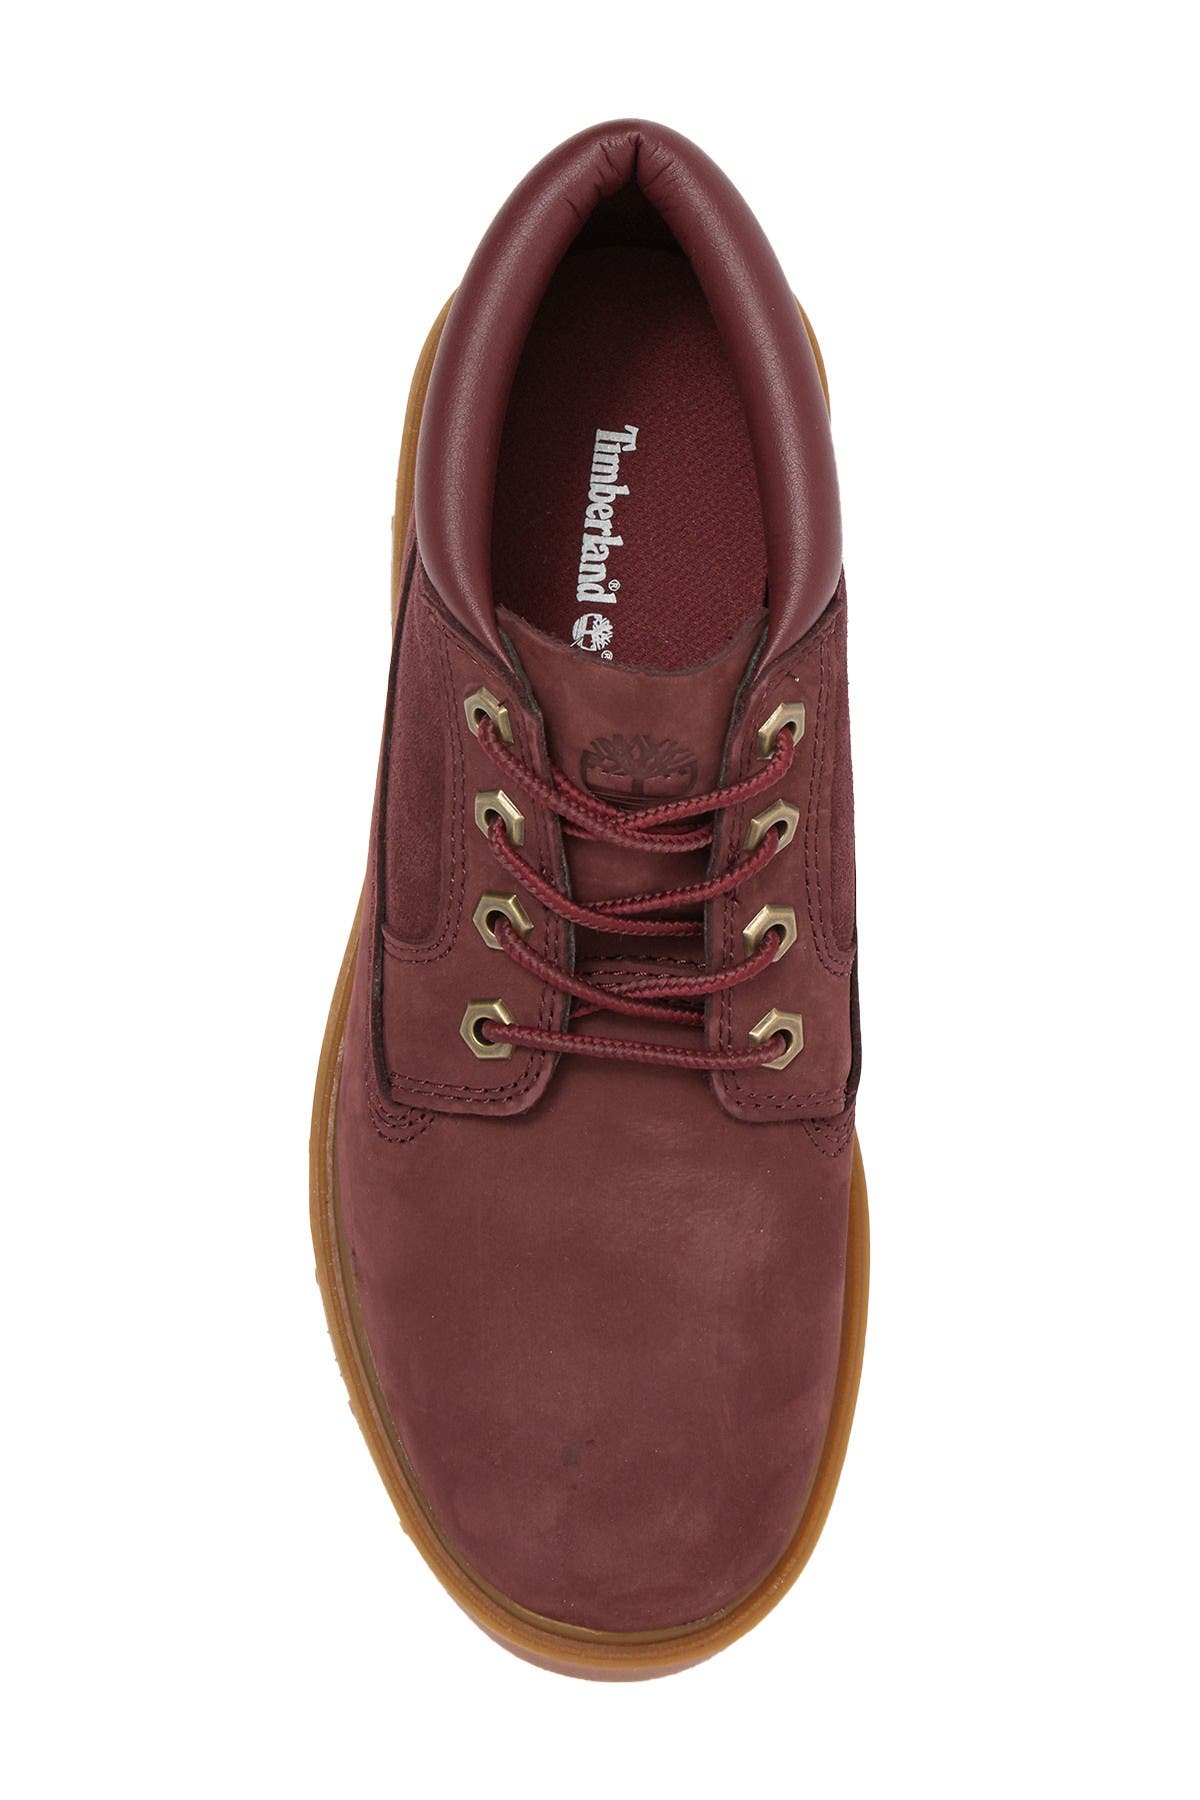 rhinebeck leather chukka boot